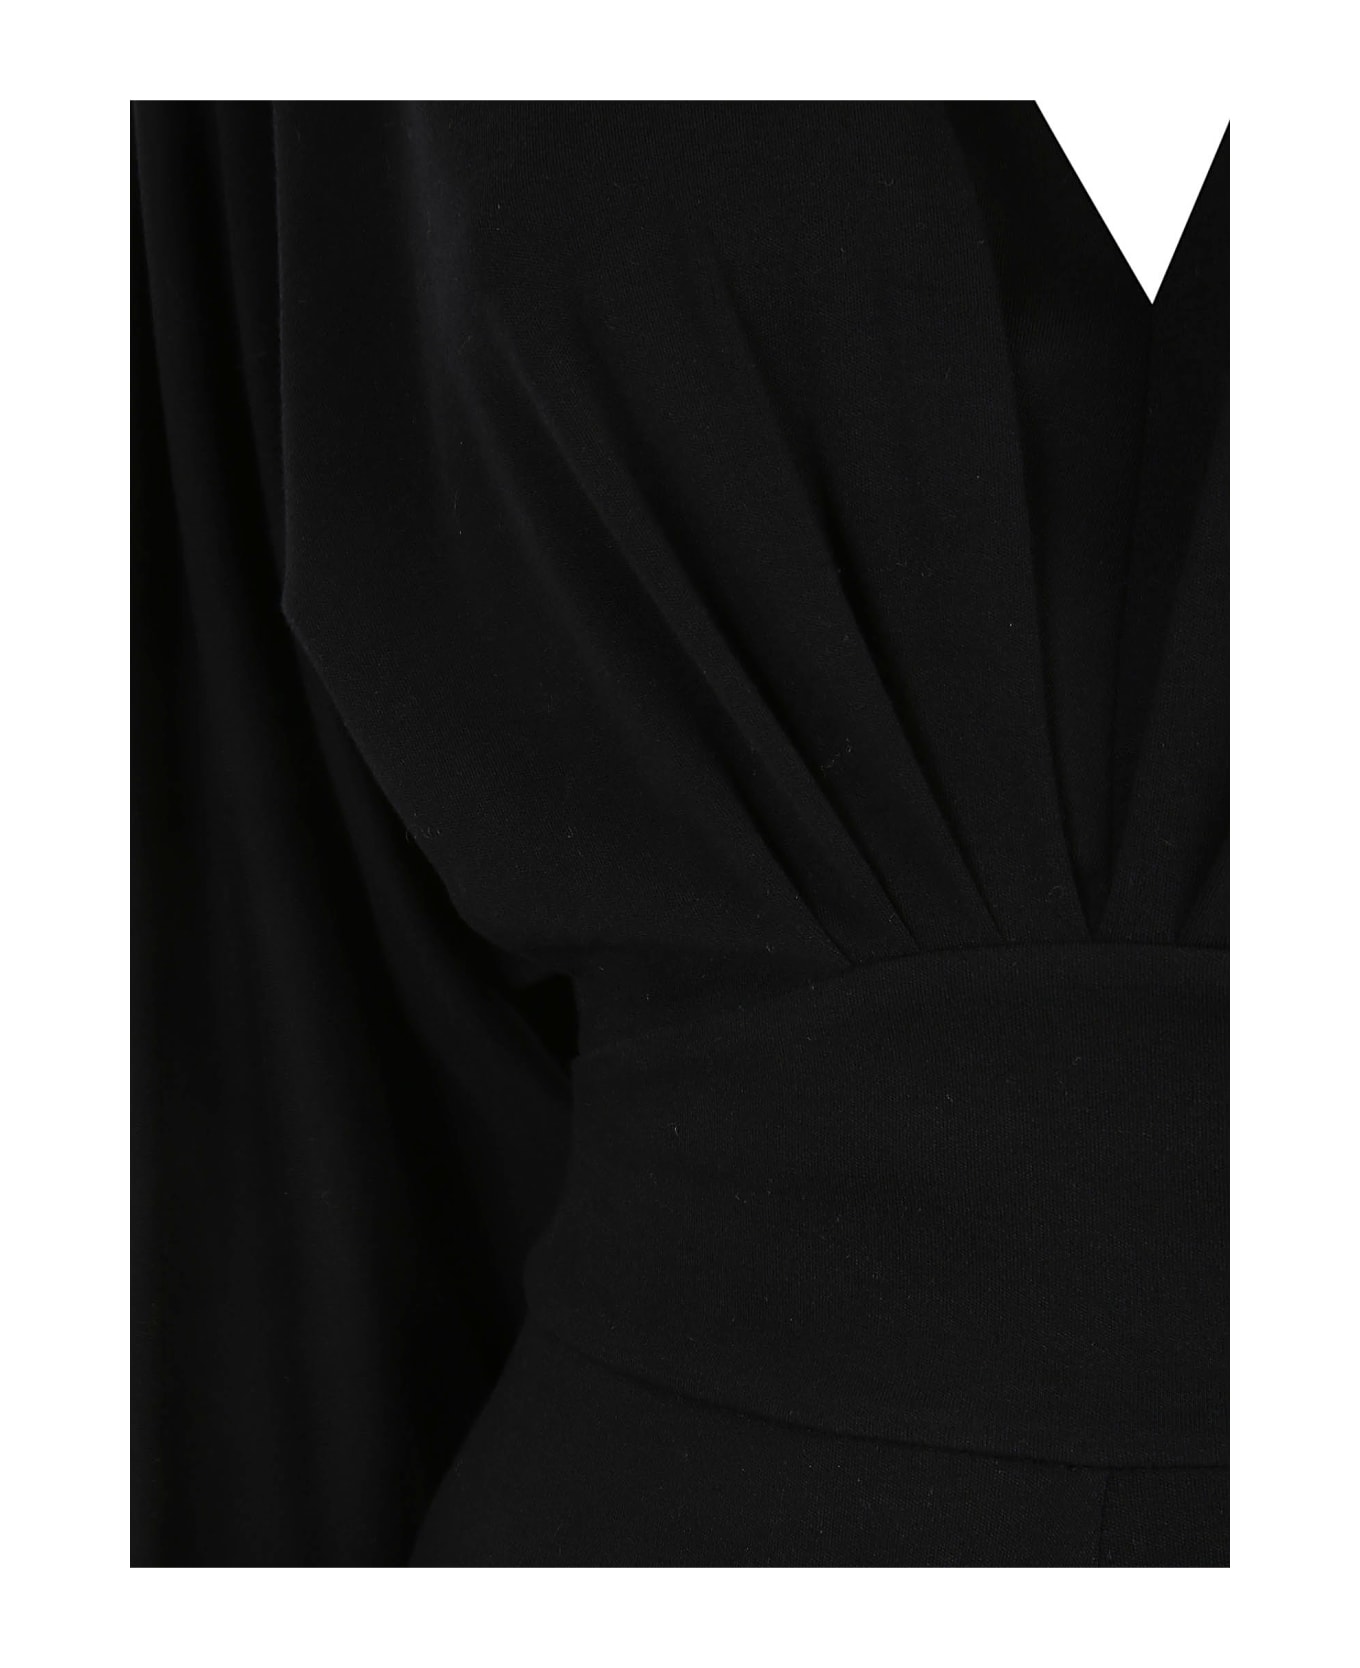 Diane Von Furstenberg Dresses Black - Black ジャンプスーツ